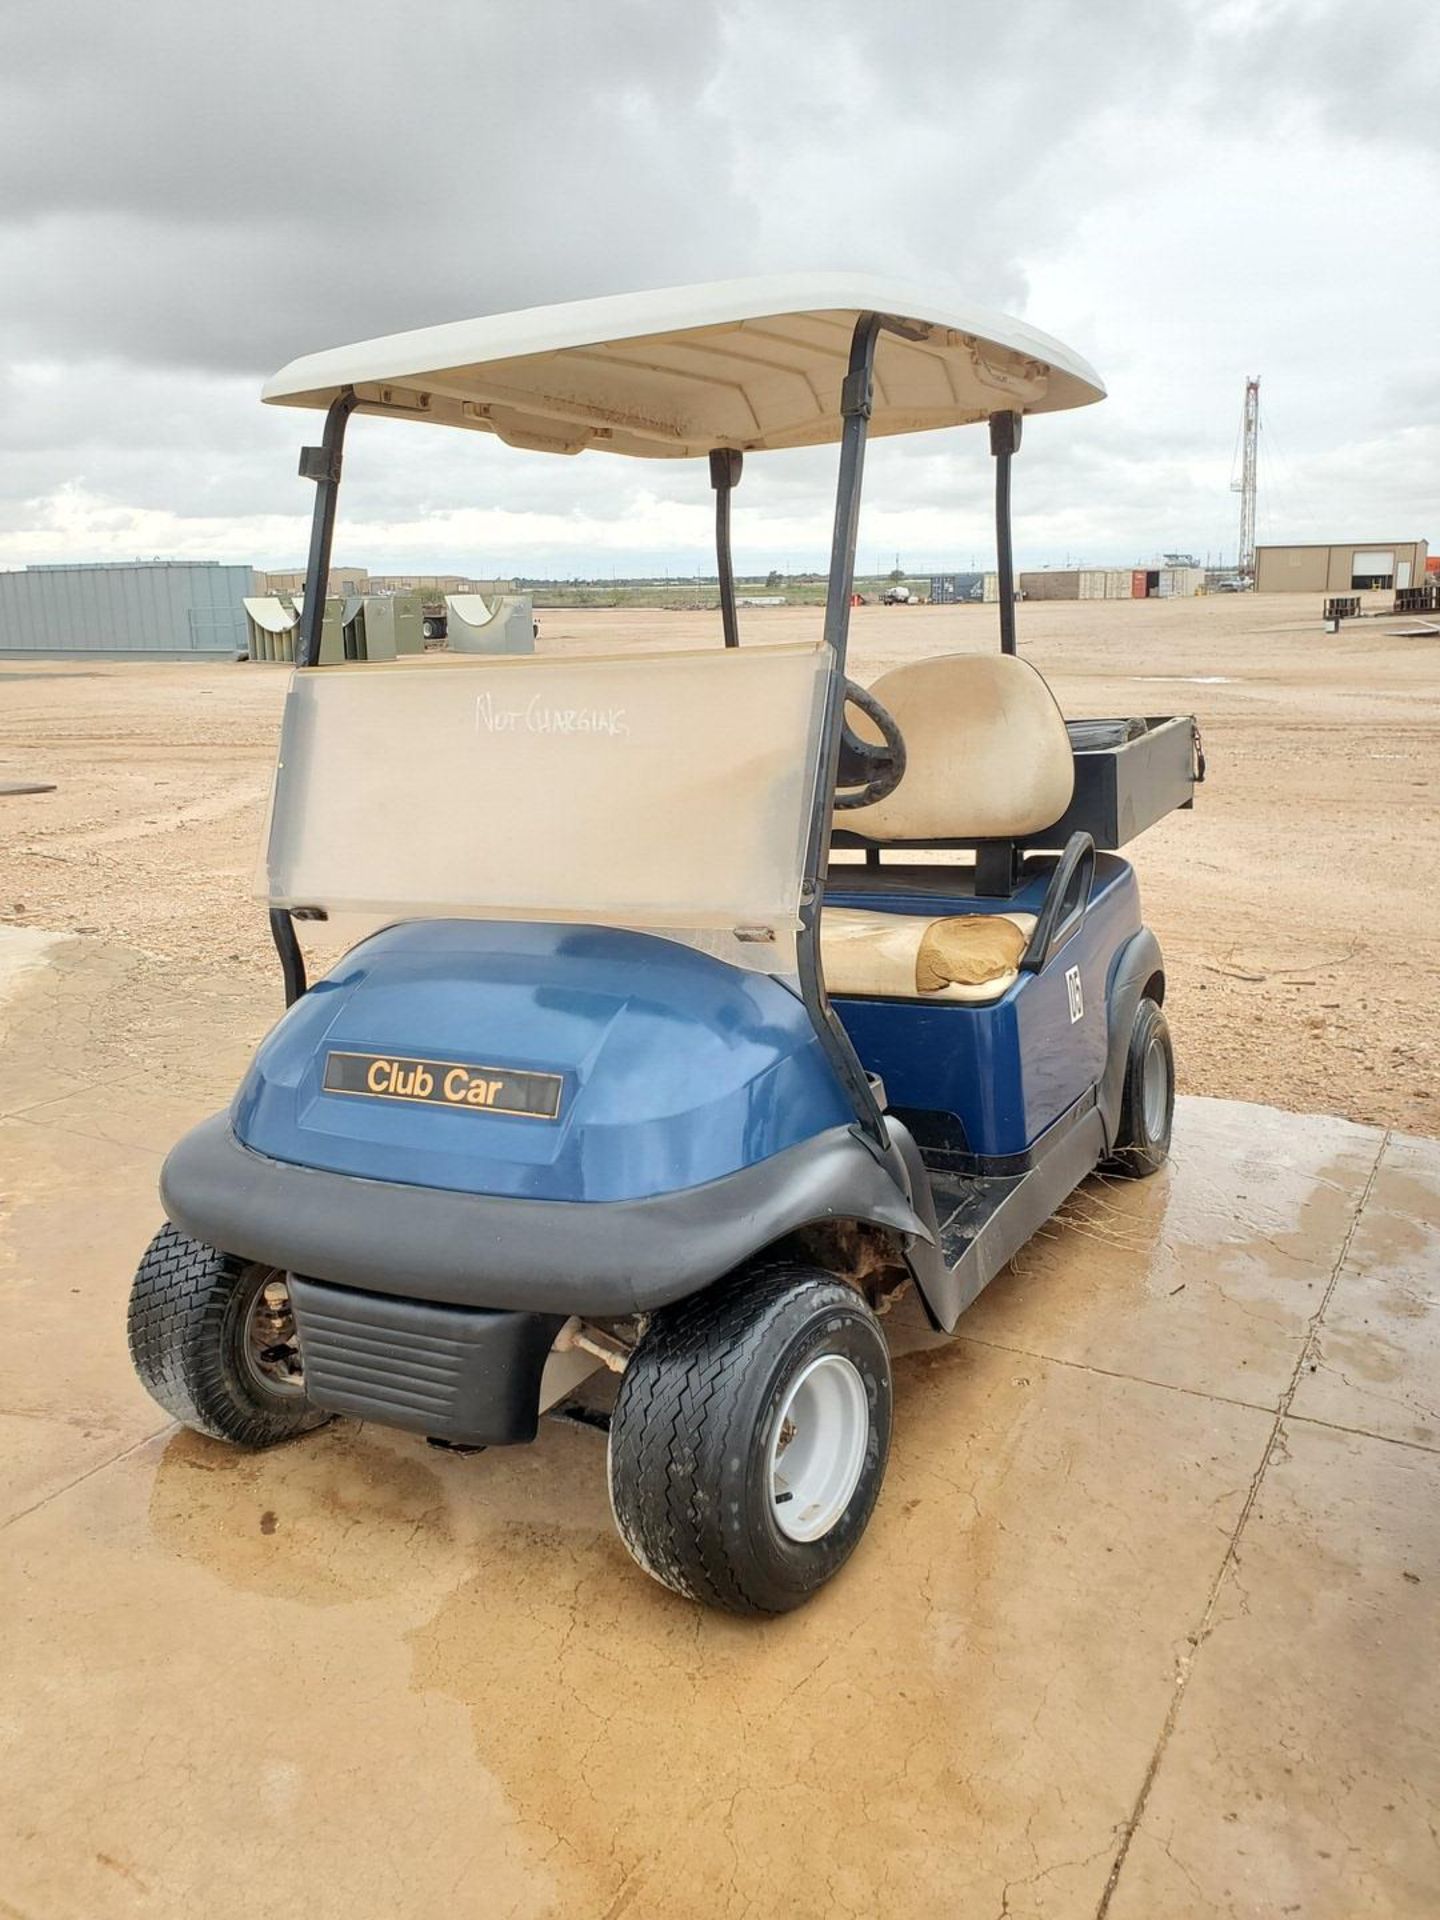 Club Car Golf Cart - Image 2 of 5